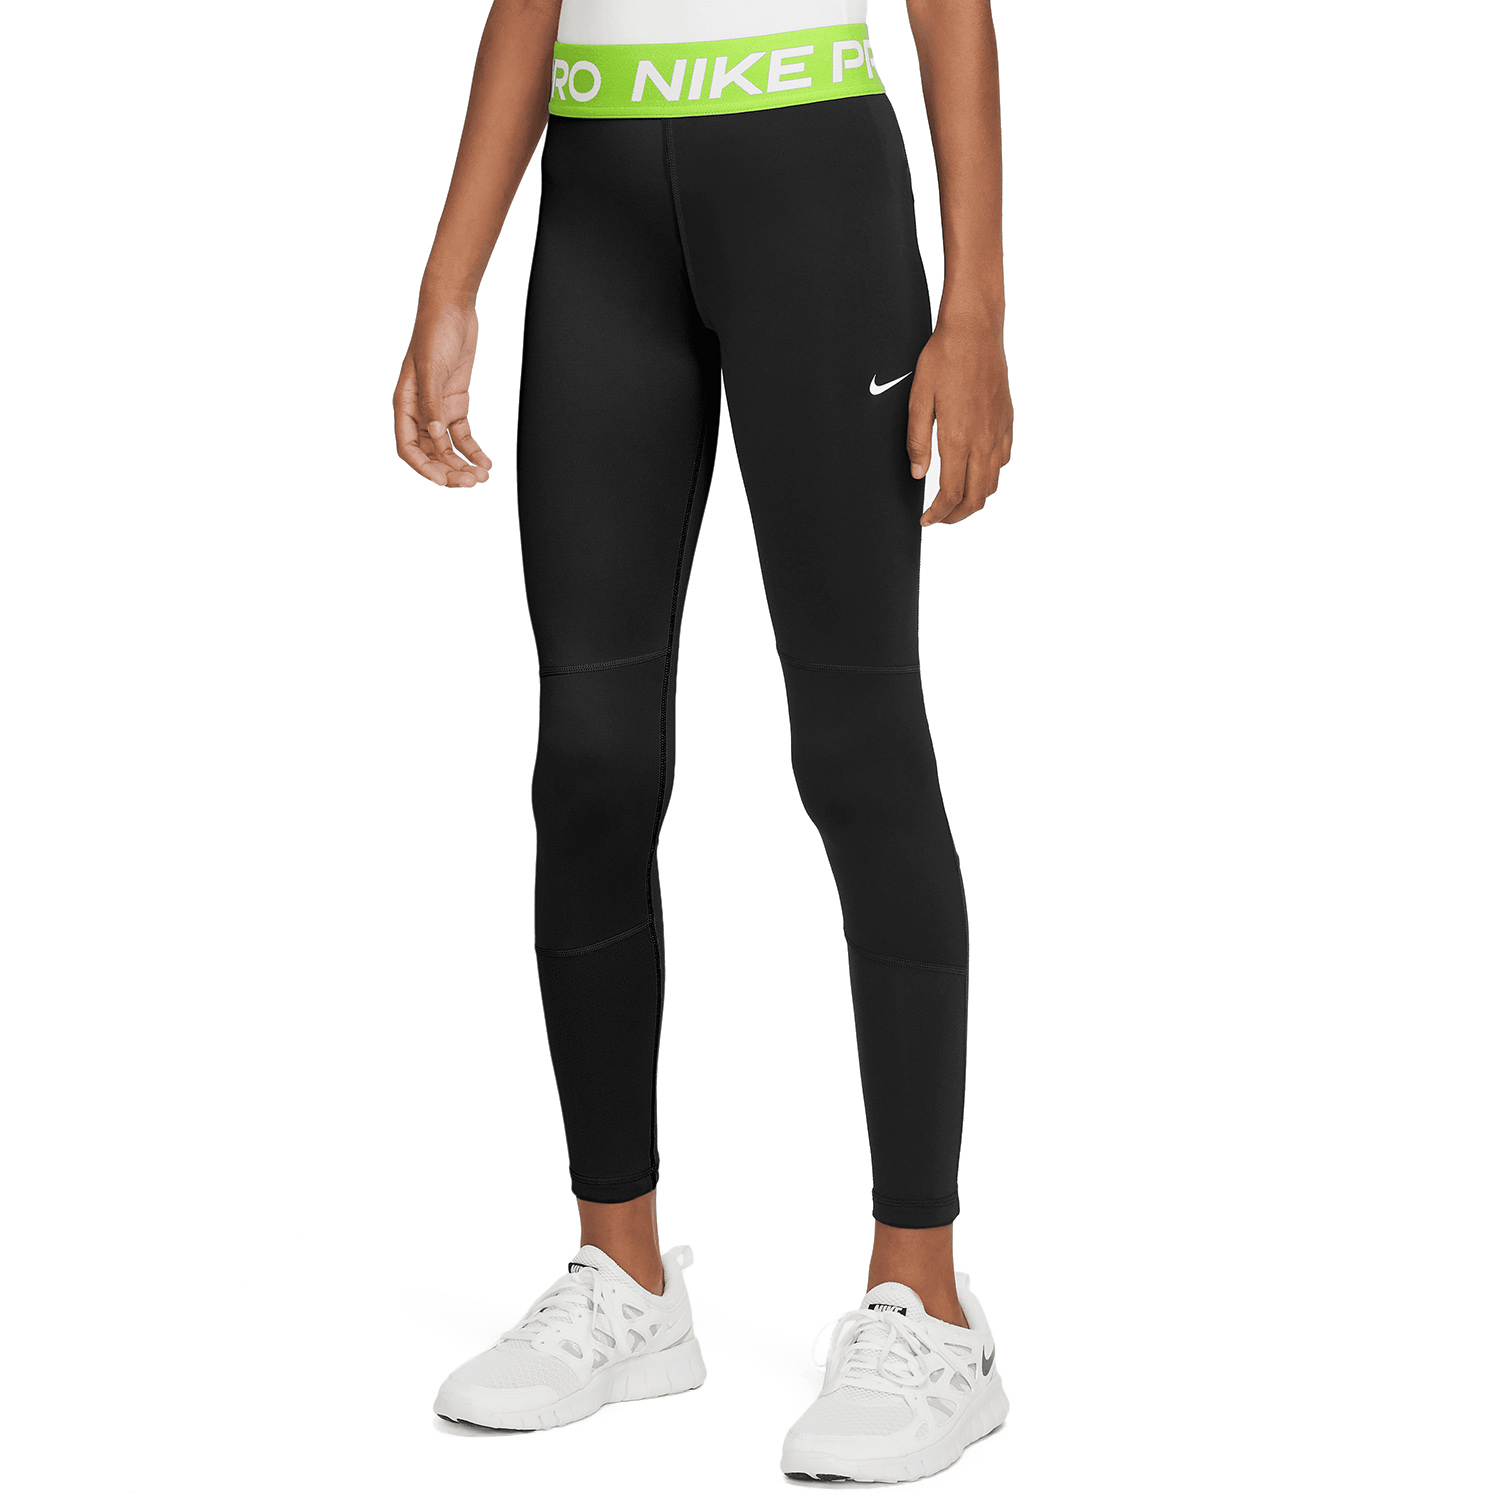 Nike Pro Tights Girl - Black/Volt/White